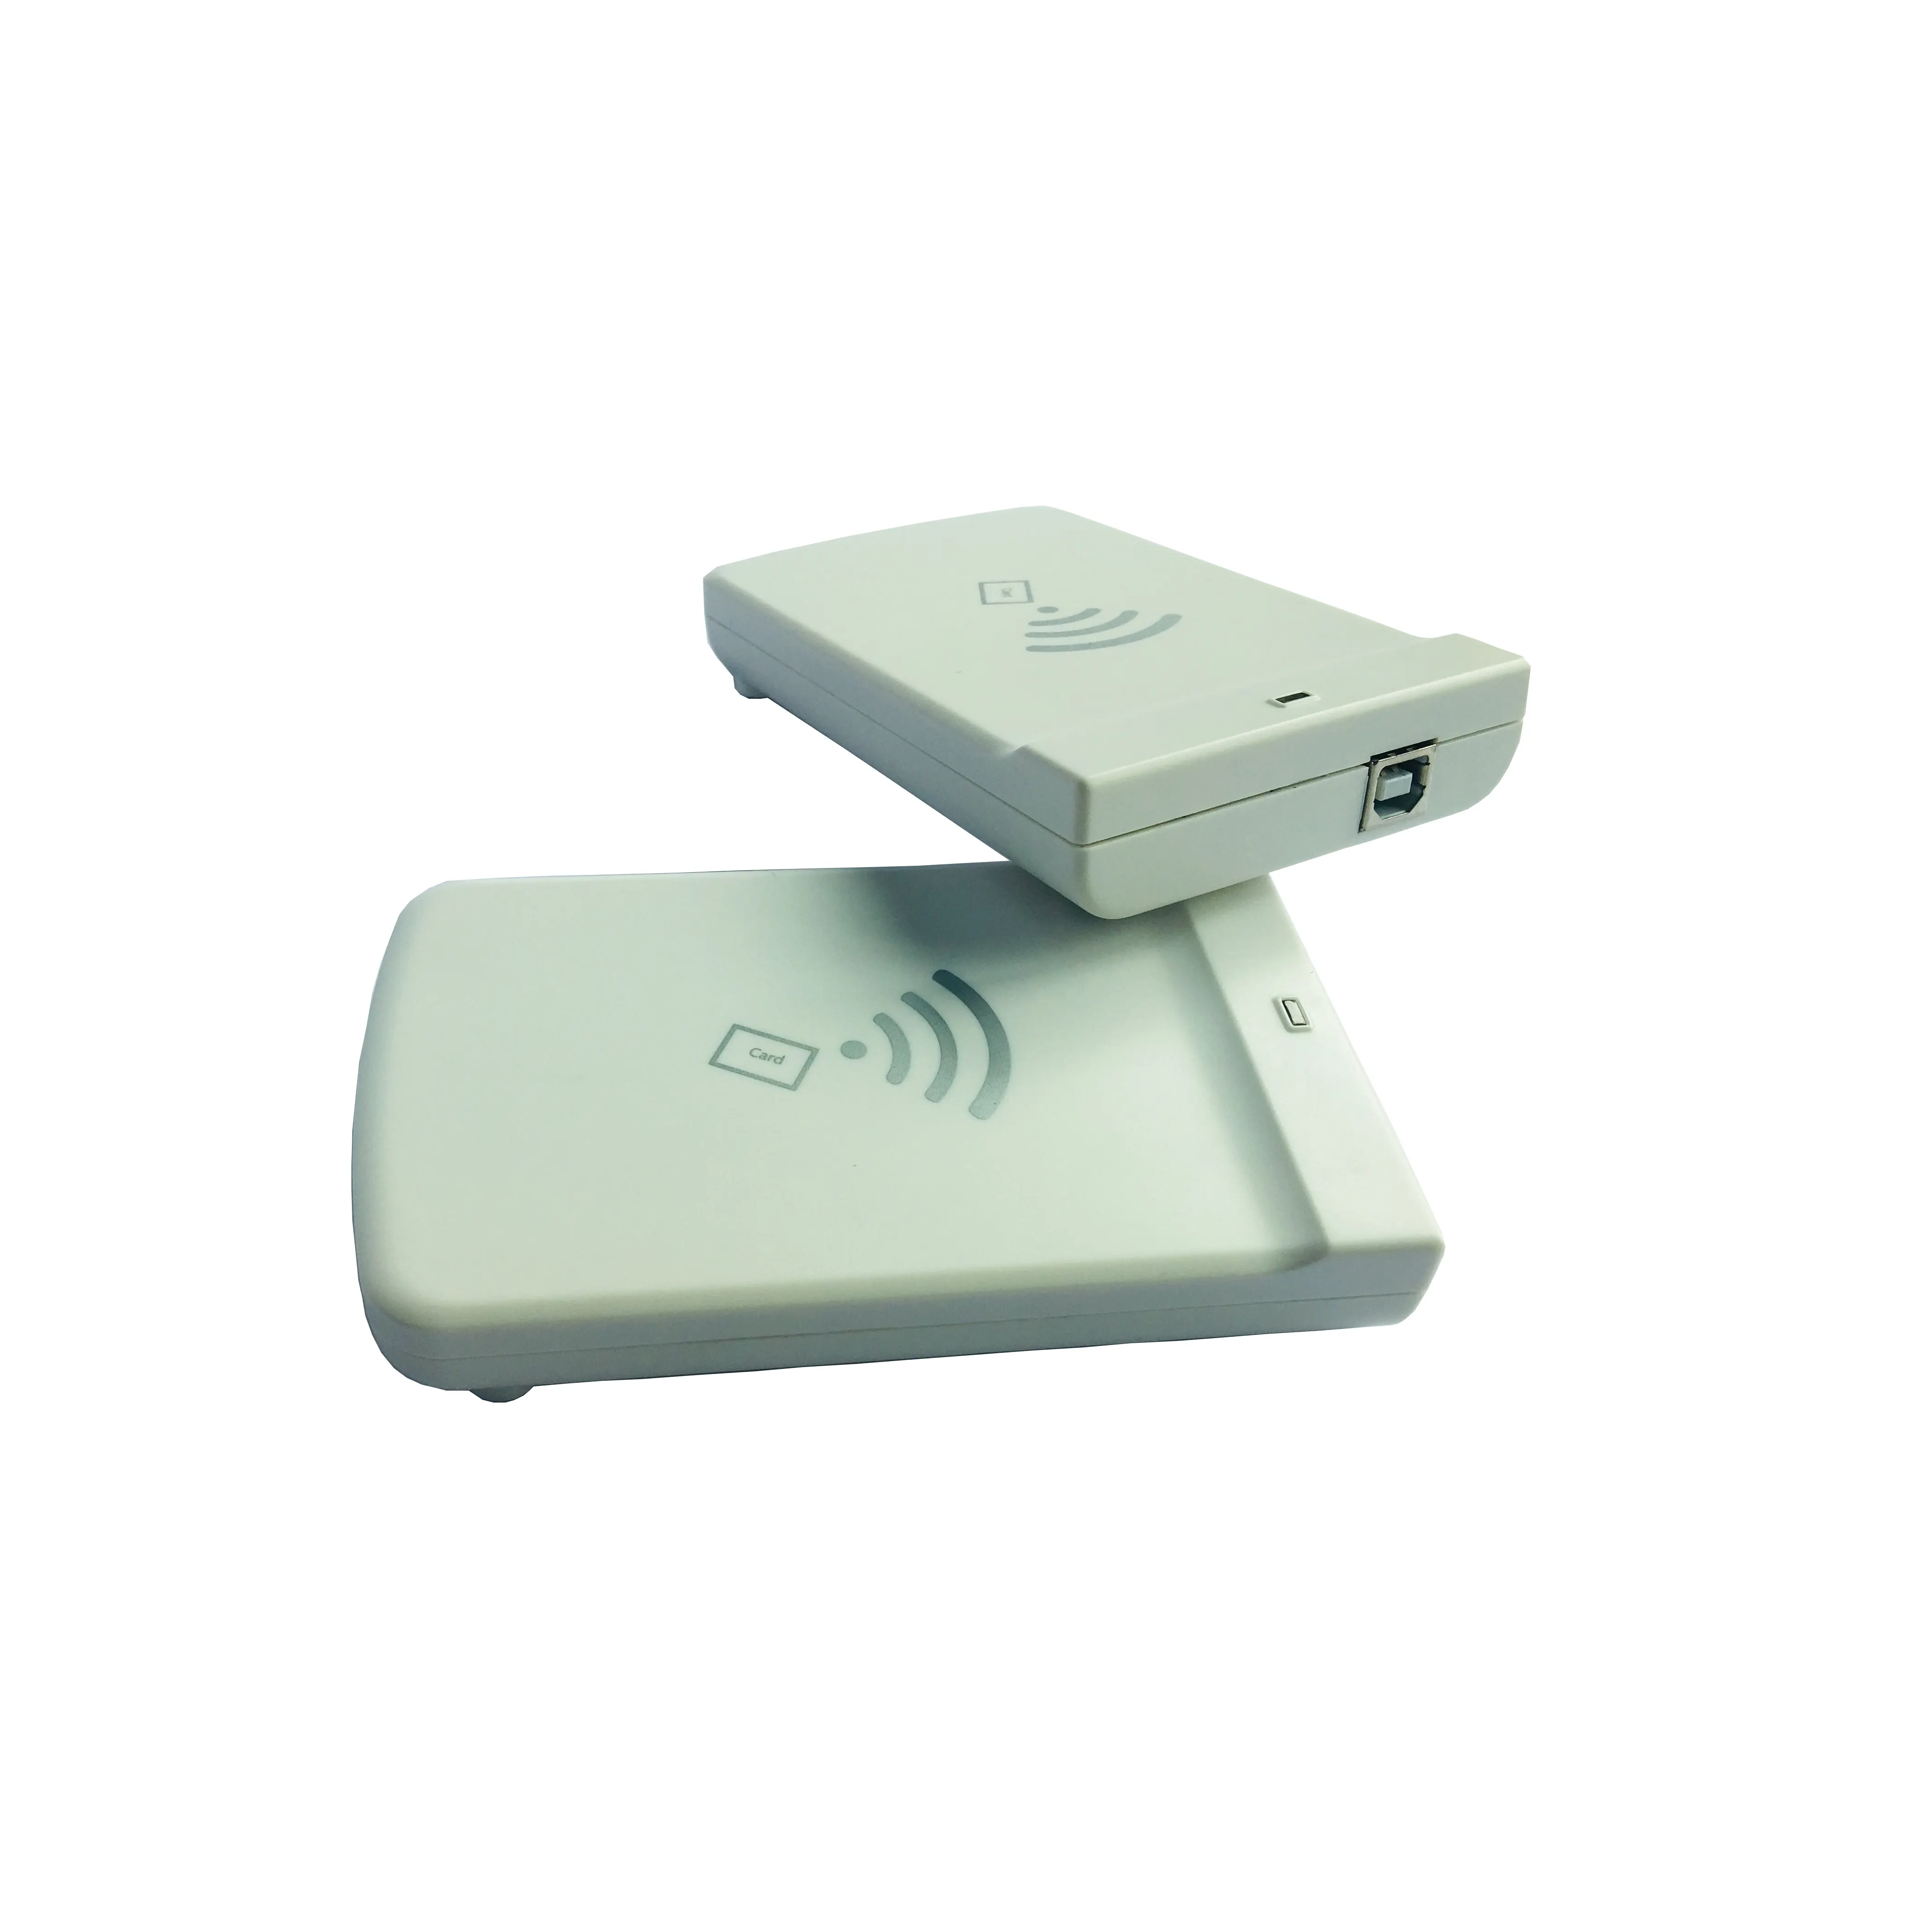 ISO18000-6C RFID אנטנה שולחן העבודה usb קורא RS232 ממשק PR9200 לכתוב טווח EPC Gen2 סופר תוכנת קורא UHF RFID רכב